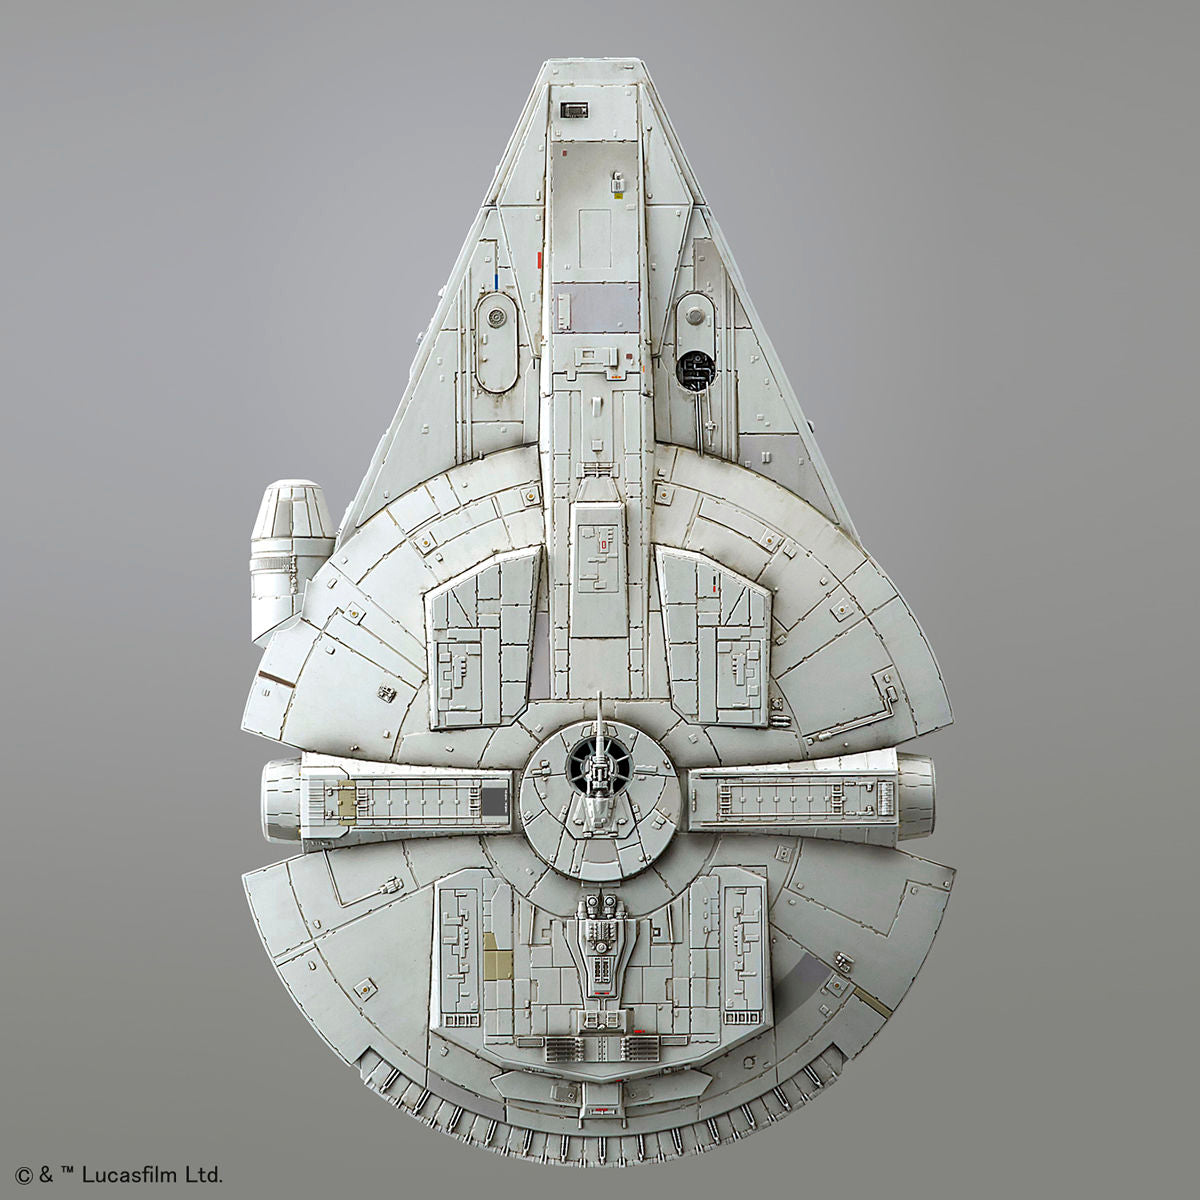 1/144 Millennium Falcon (Lando Calrissian Ver.)